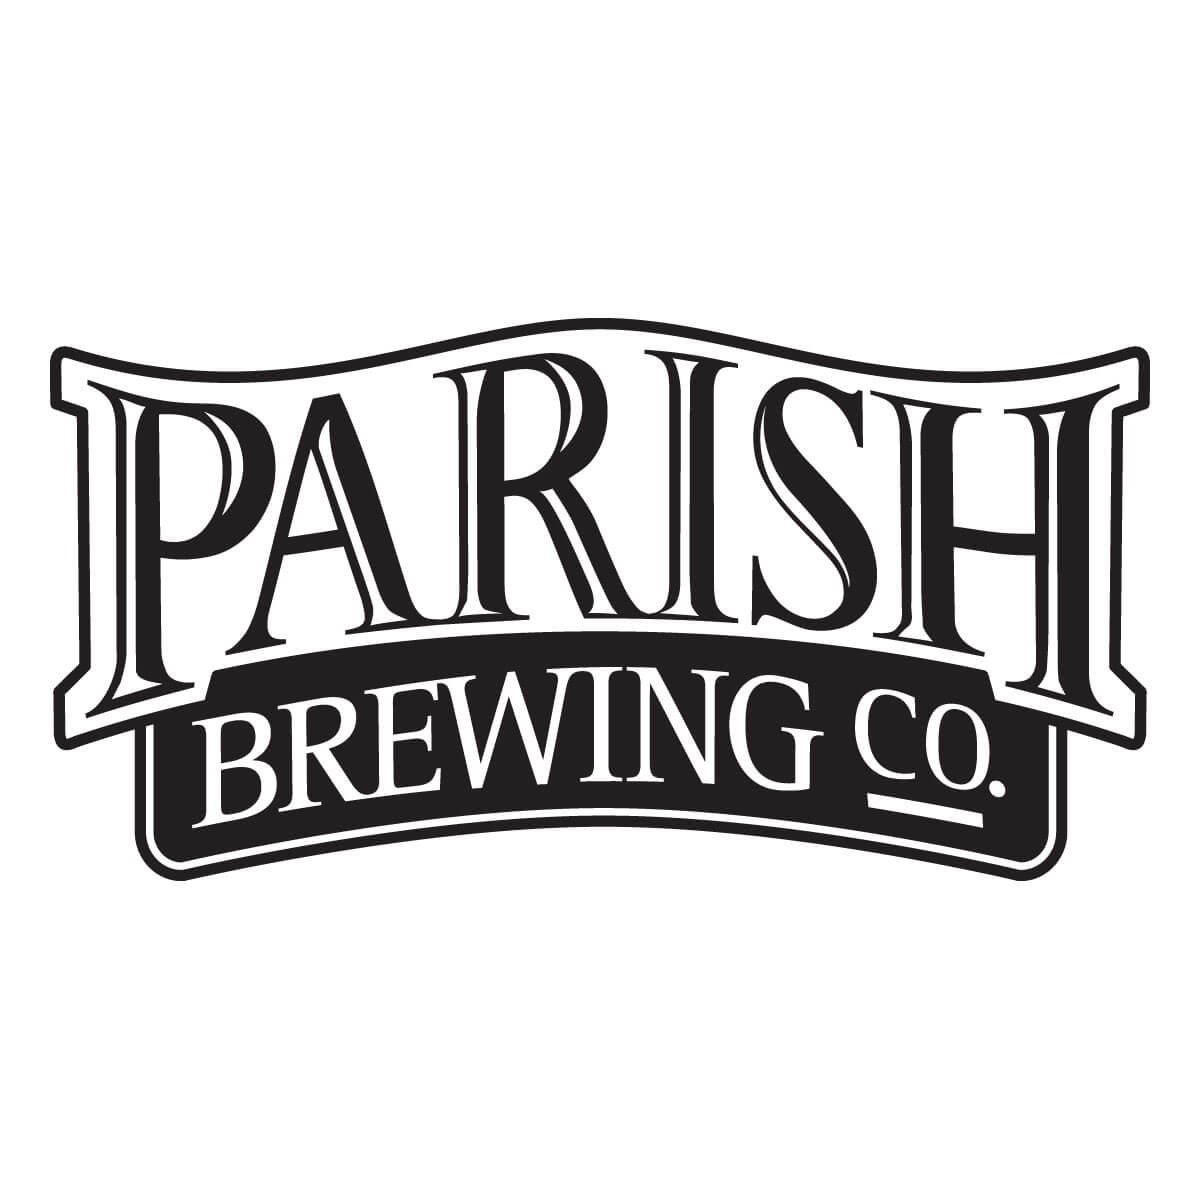 AB-Breweries-Parish-Brewing-Co-Logo-1.jpg